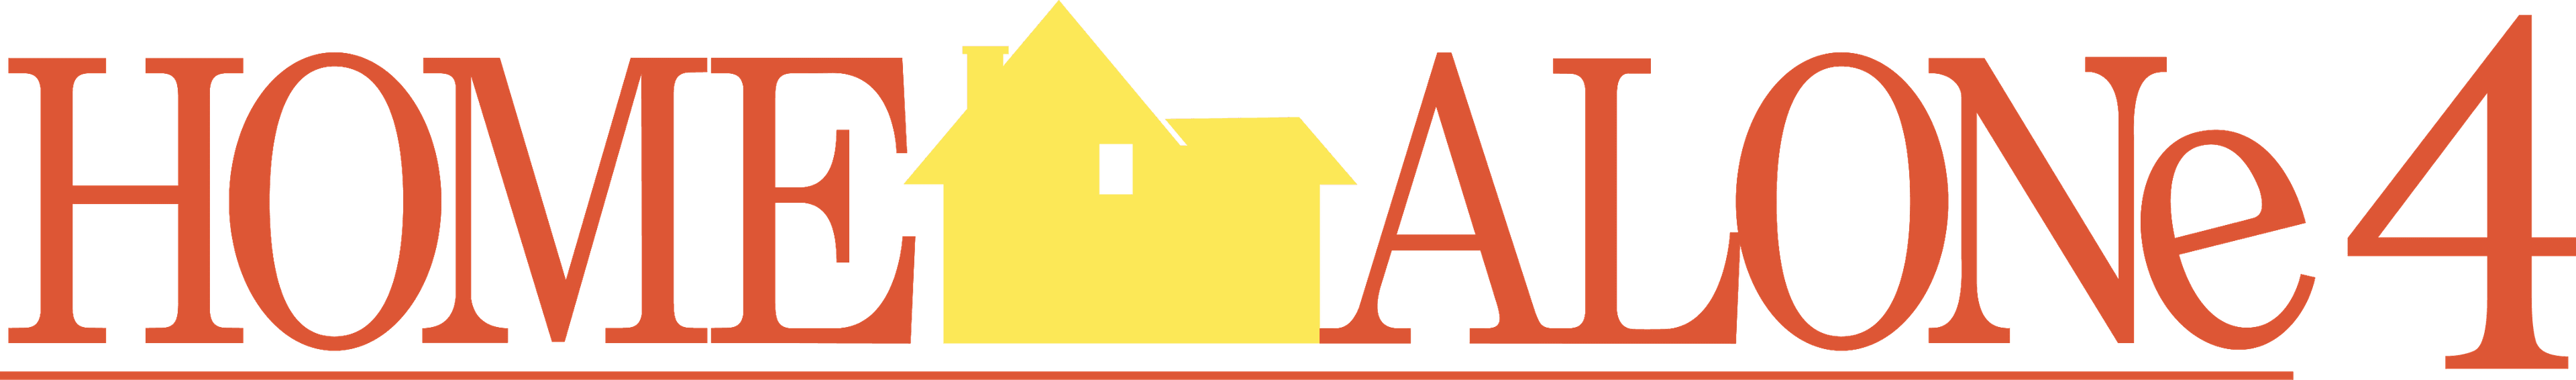 Home Alone 4 logo